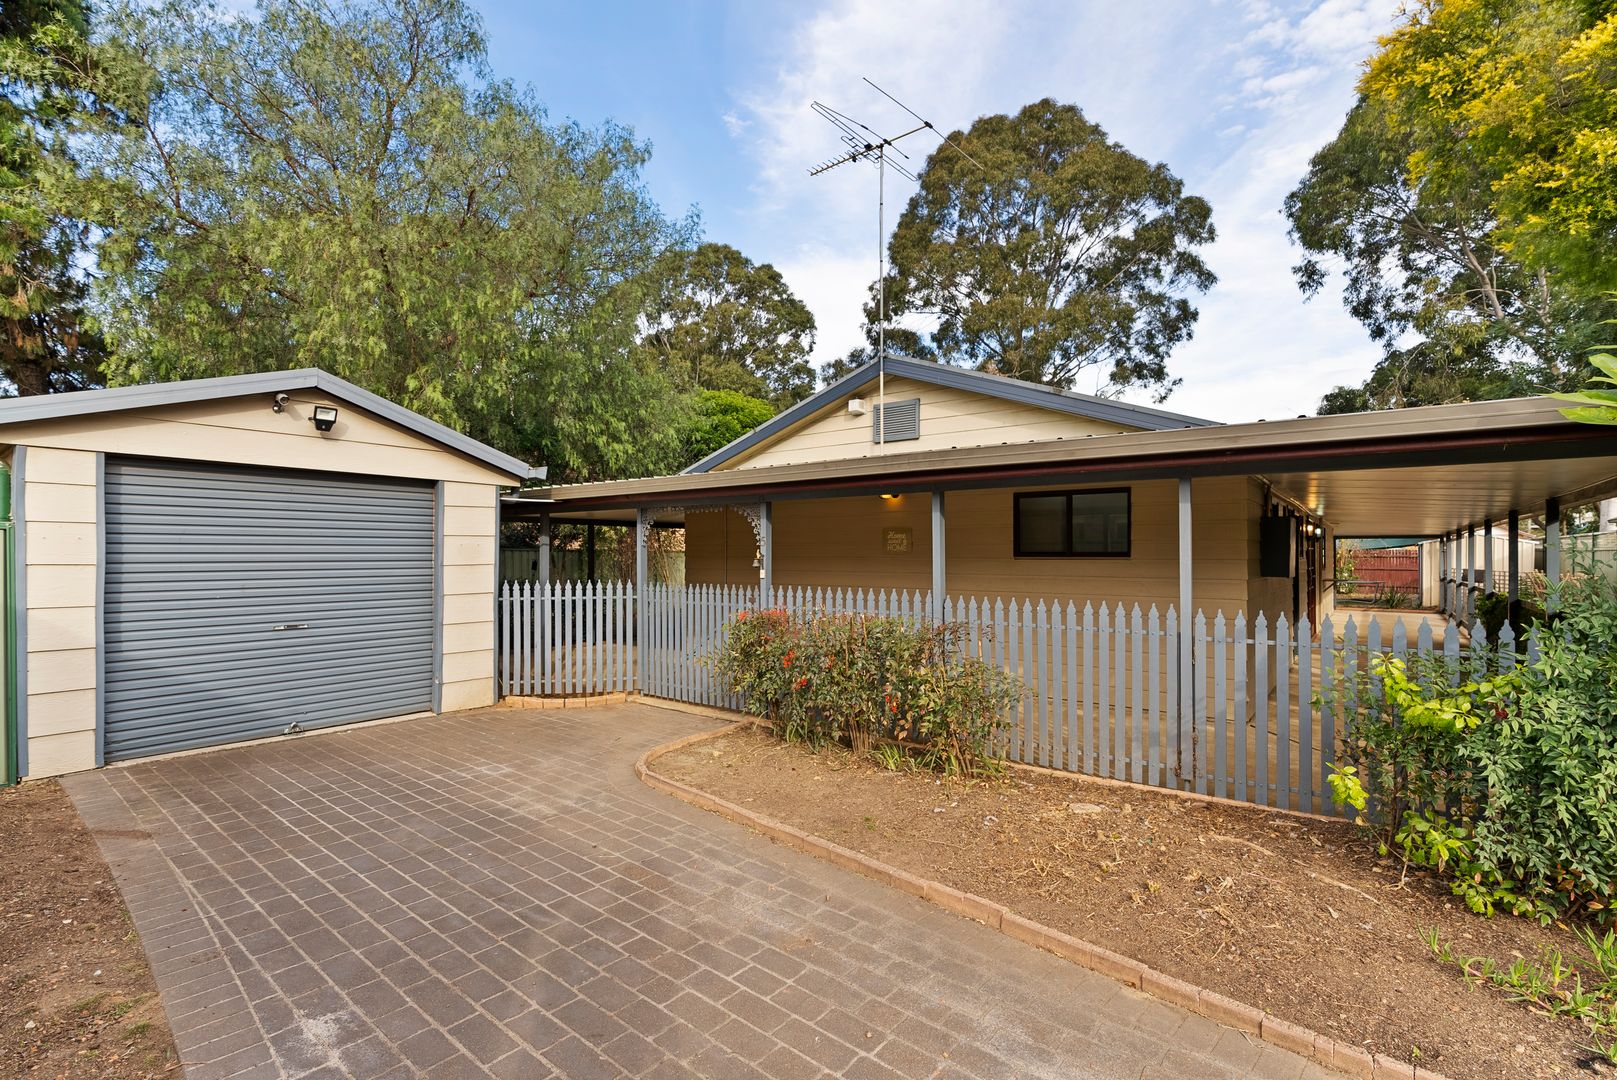 3 bedrooms House in 5/46 Princess Street WERRINGTON NSW, 2747